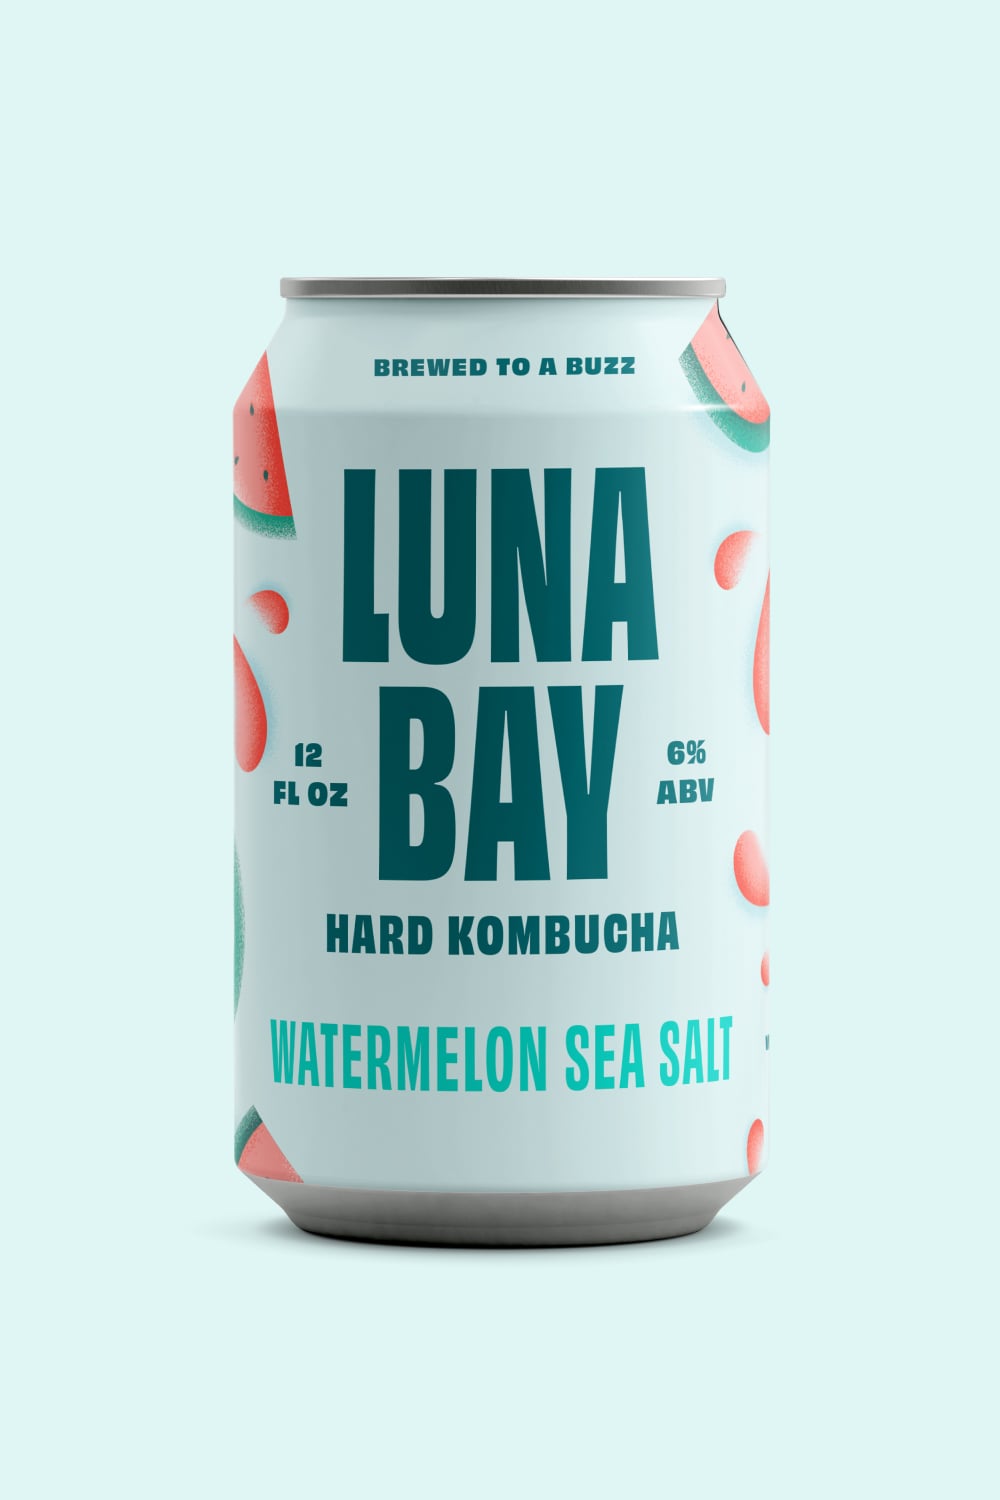 Watermelon Sea Salt